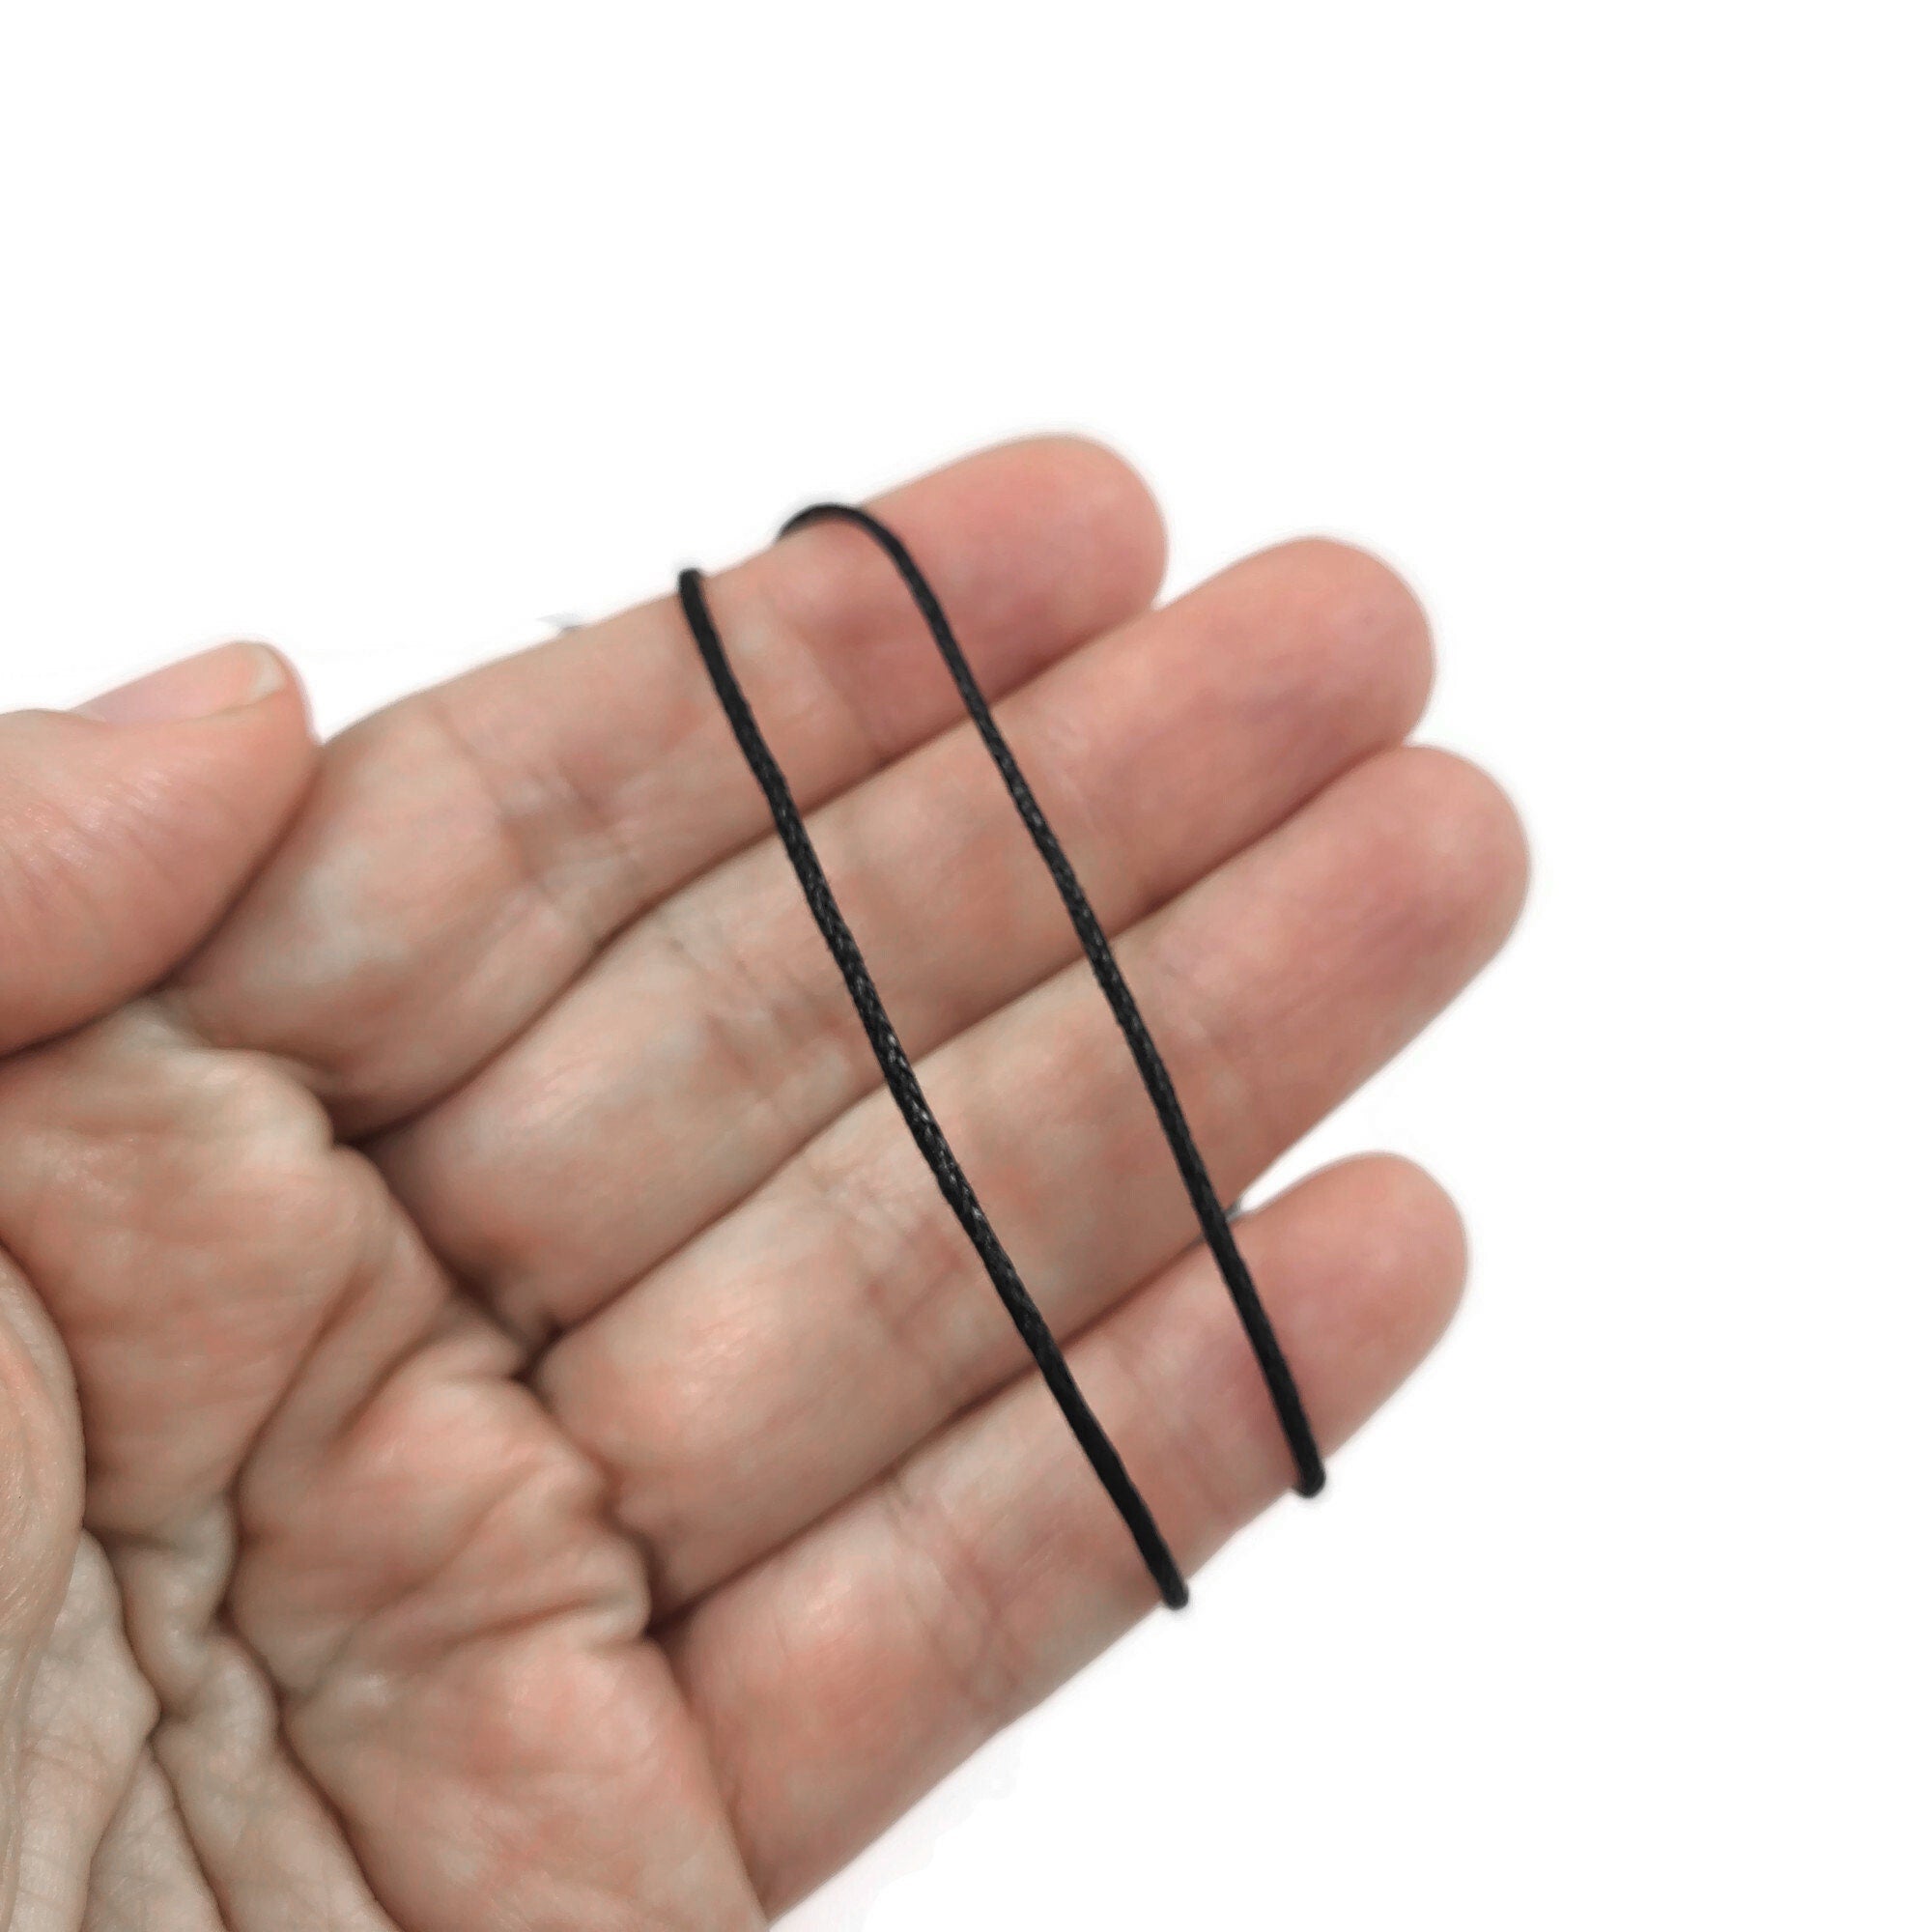 Elastic Stretch Cord, Stretchy String for Bracelets, 0.5mm 0.6mm